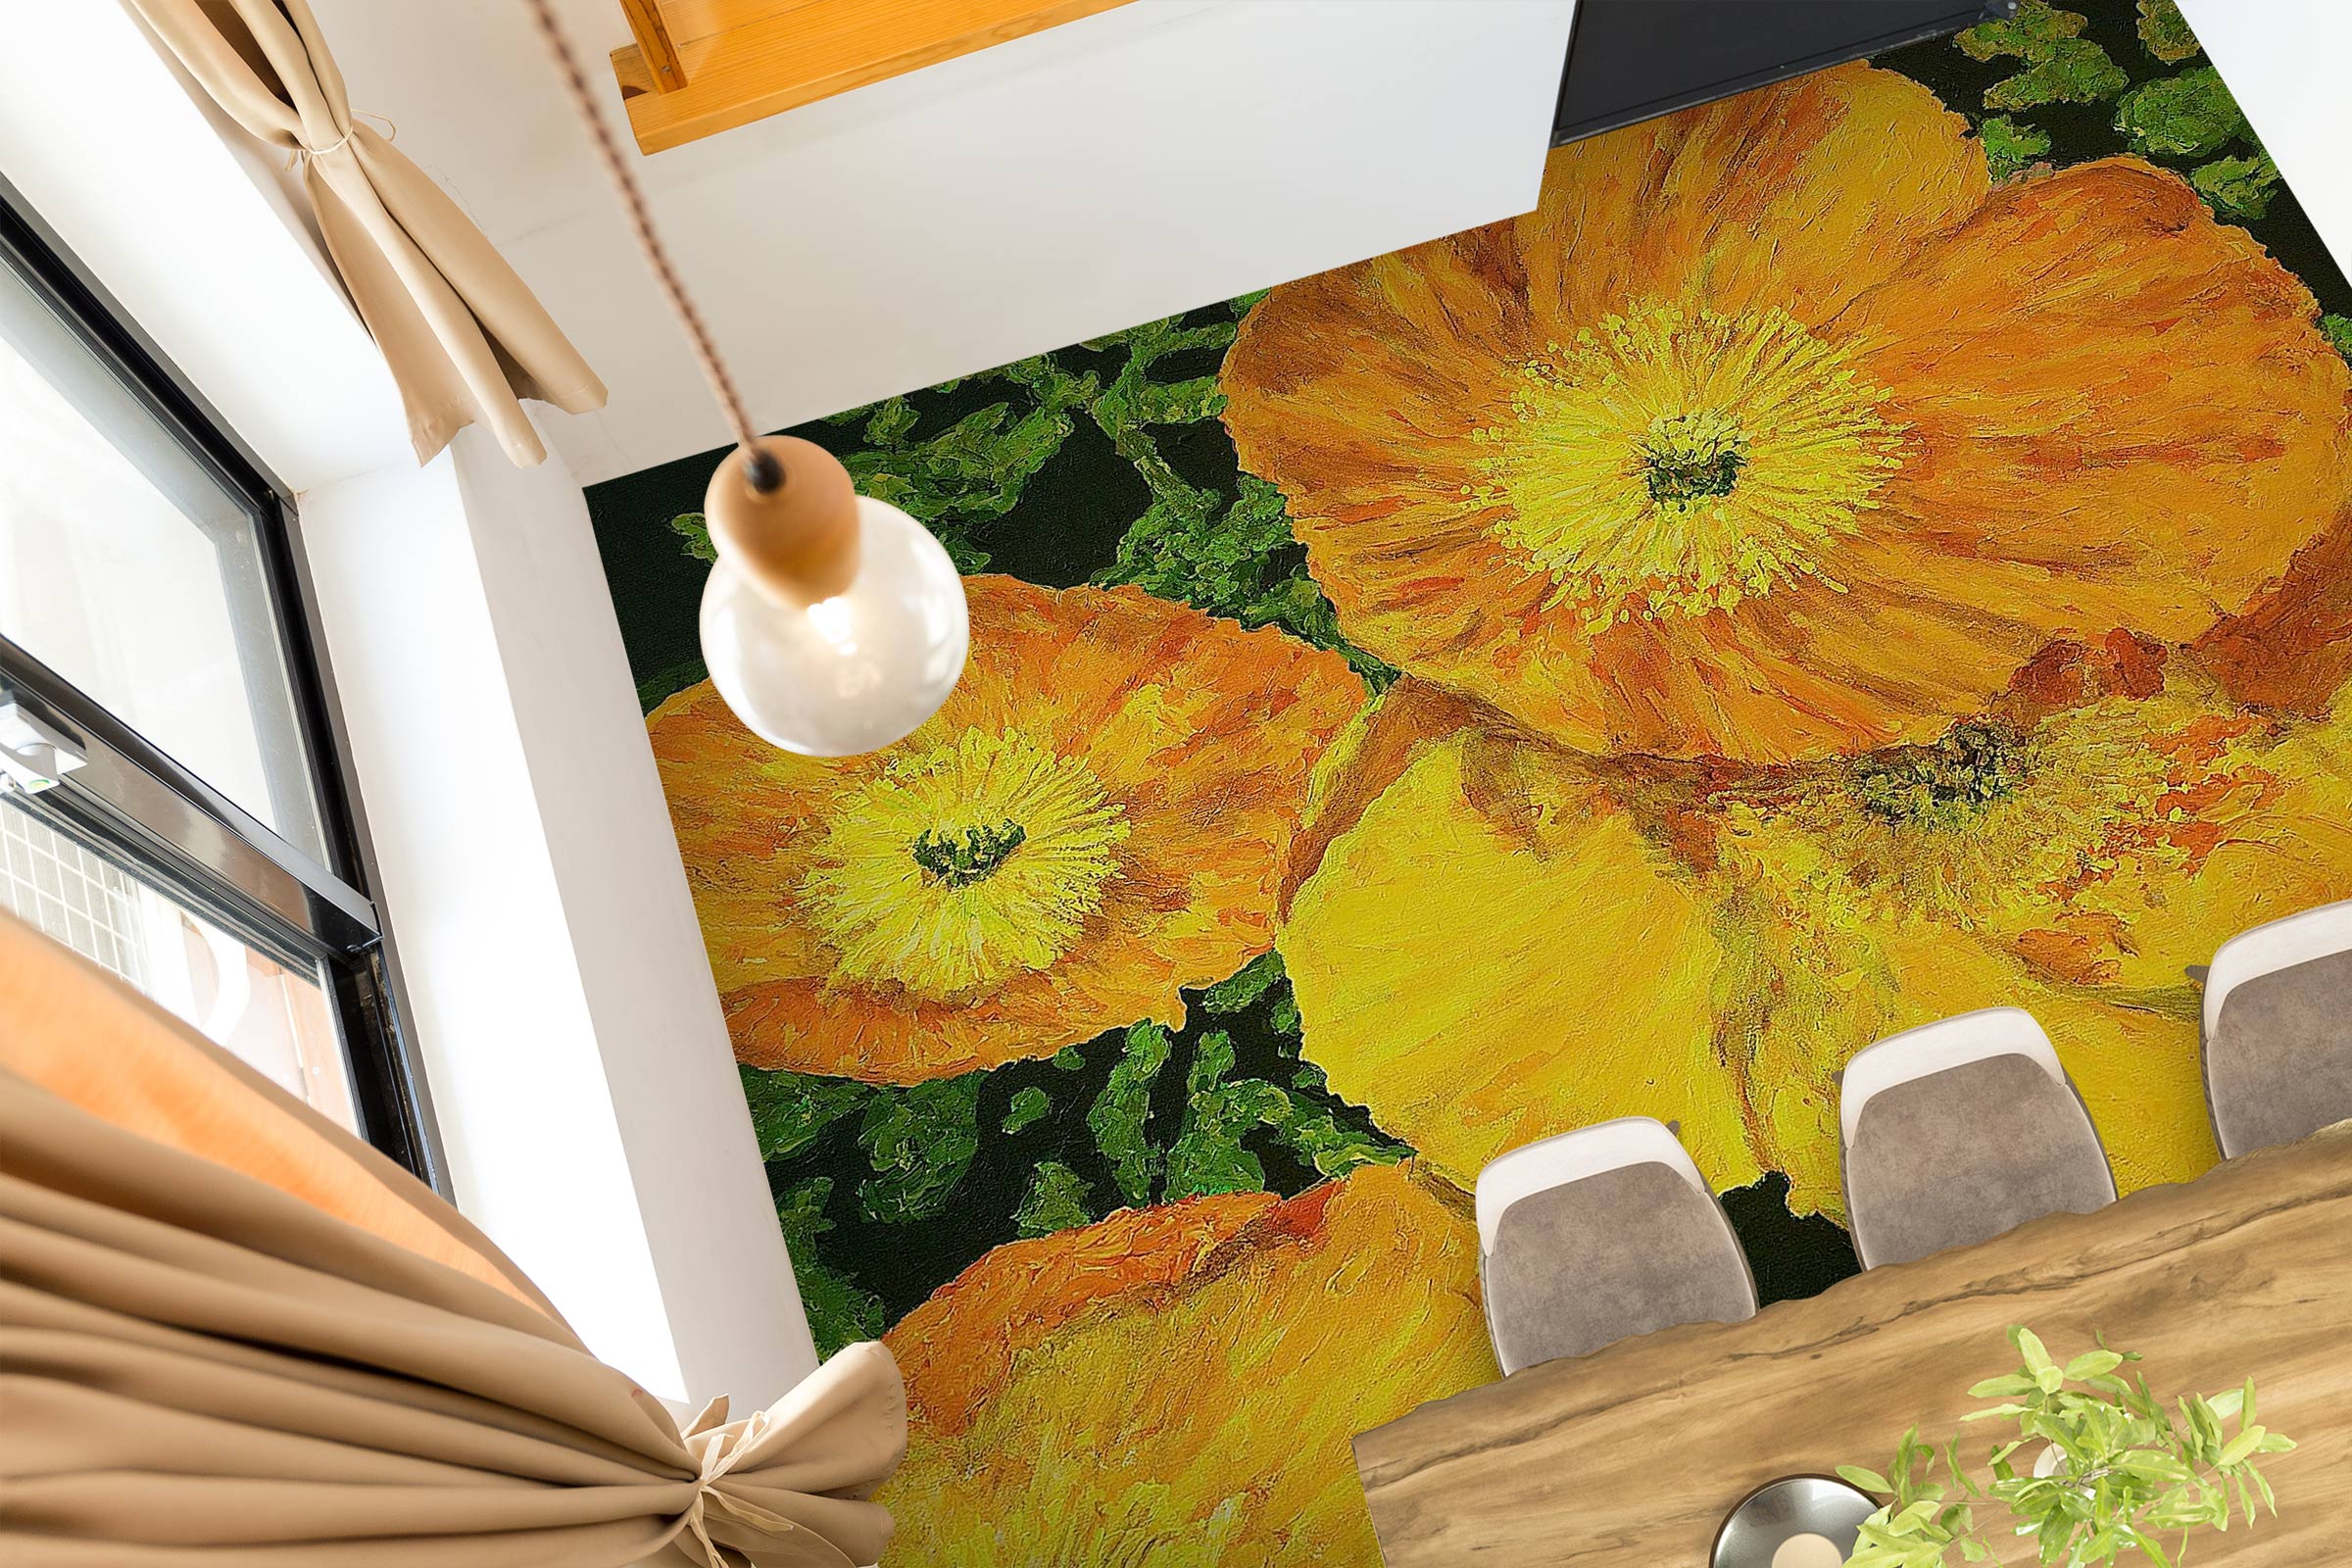 3D Yellow Flower 9601 Allan P. Friedlander Floor Mural  Wallpaper Murals Self-Adhesive Removable Print Epoxy